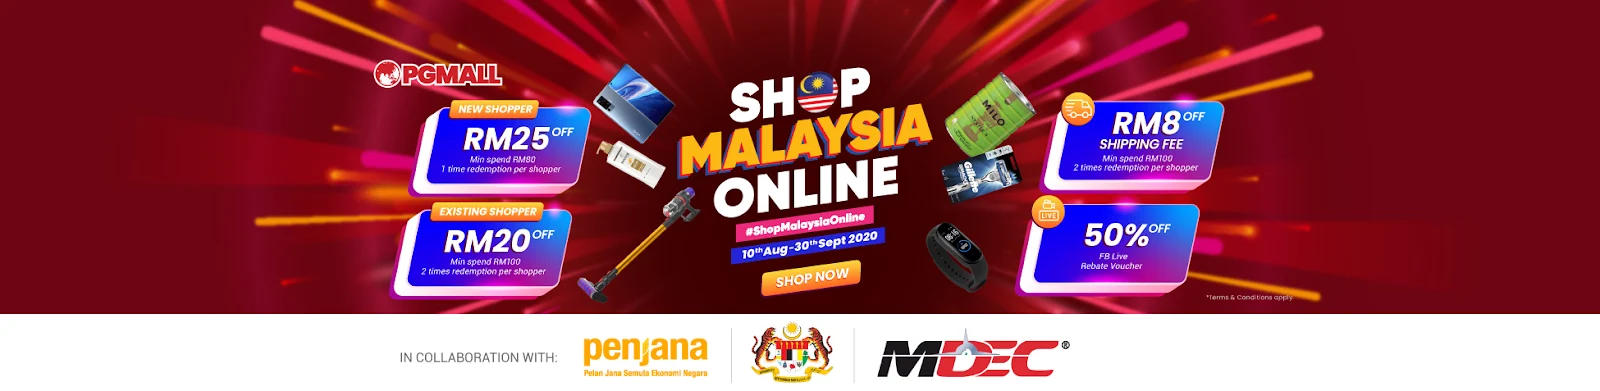 Shop-Malaysia-Online_-1950x477px_Website-Slider